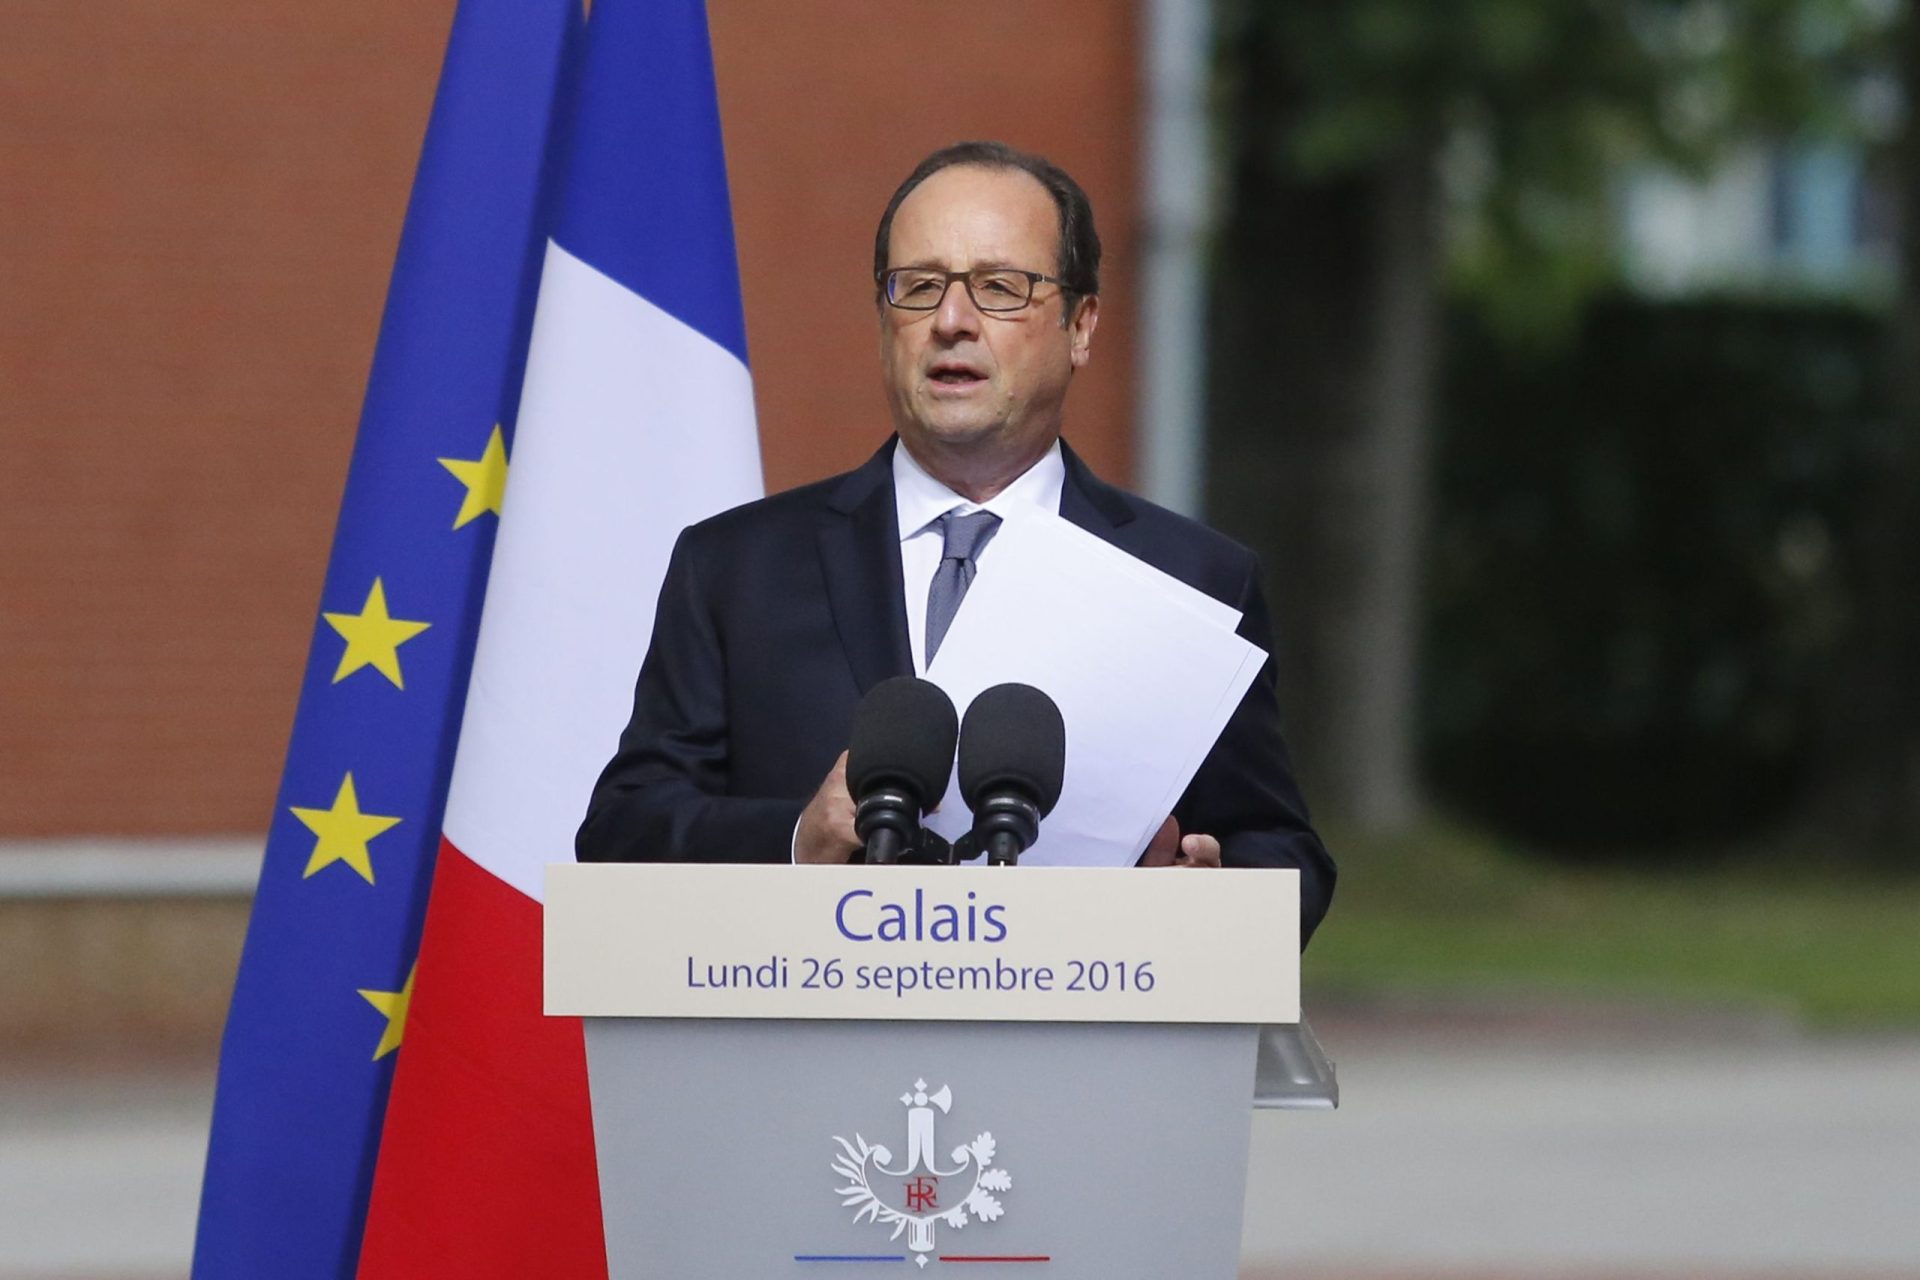 É preciso desmantelar “definitivamente” o campo de Calais, diz Hollande